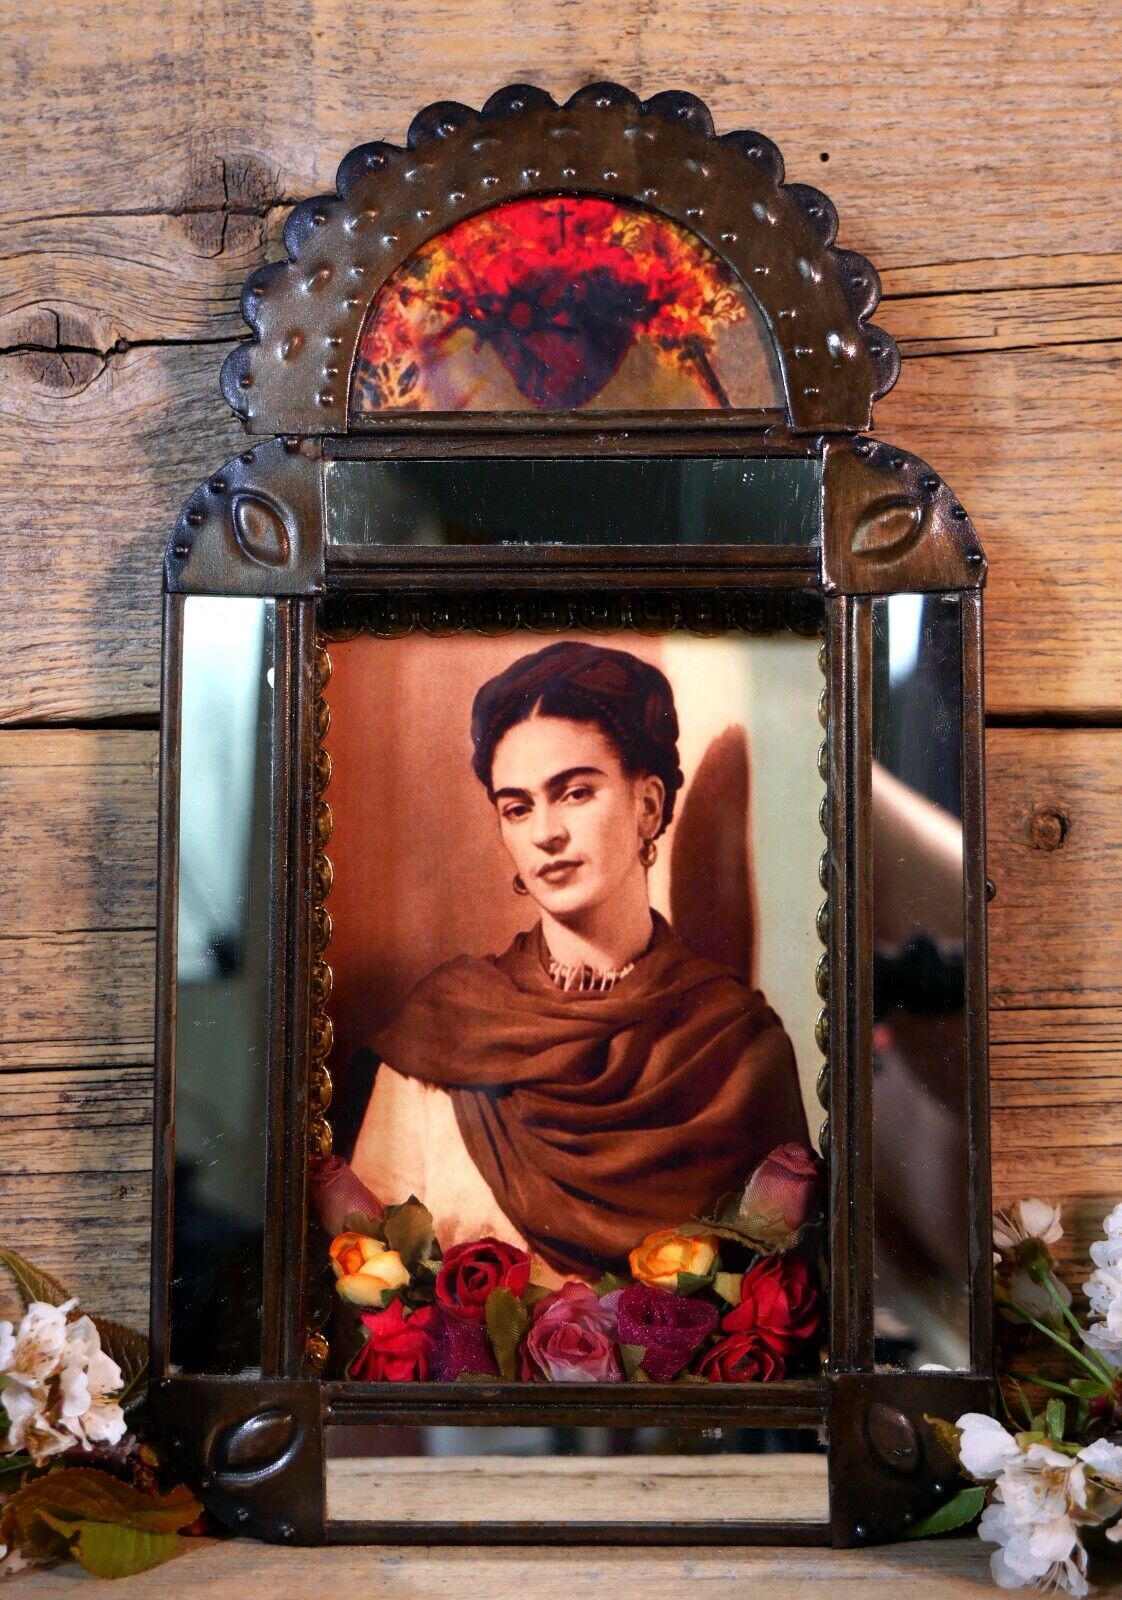 Retablo Frida Kahlo Artist Handmade Metal Mirrored Panels Roses Mexico Folk Art